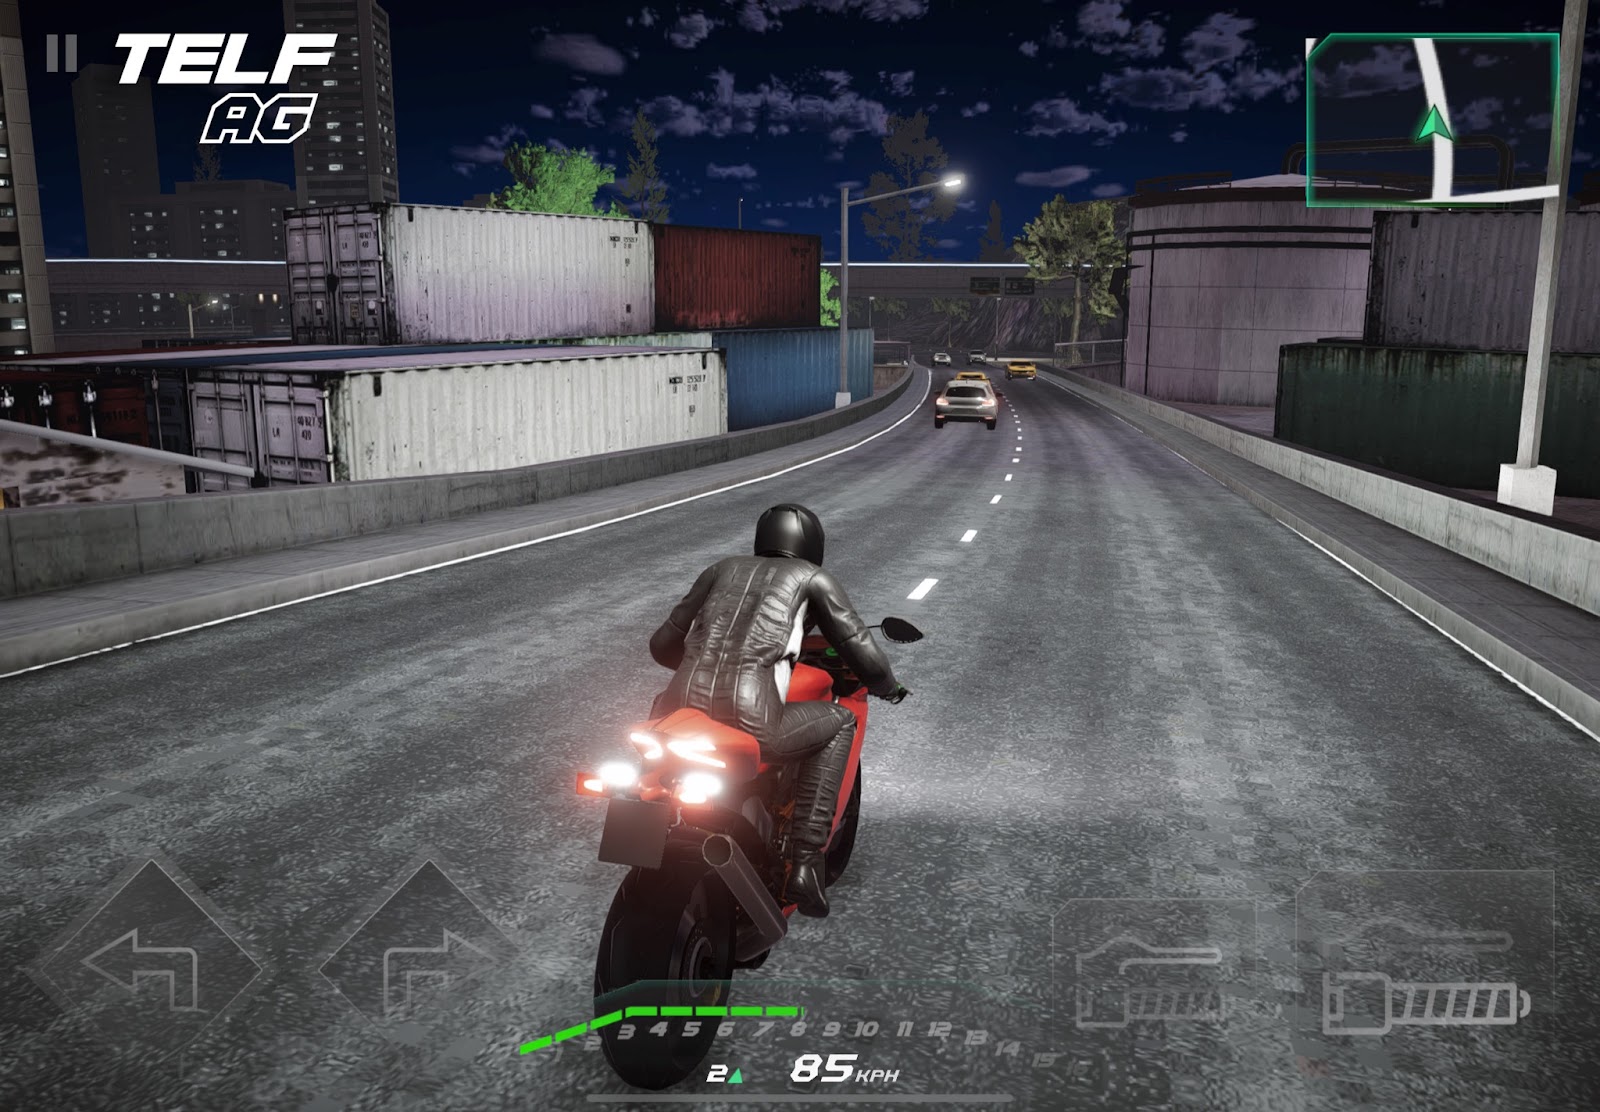 telf ag install original racing bike game on IOS